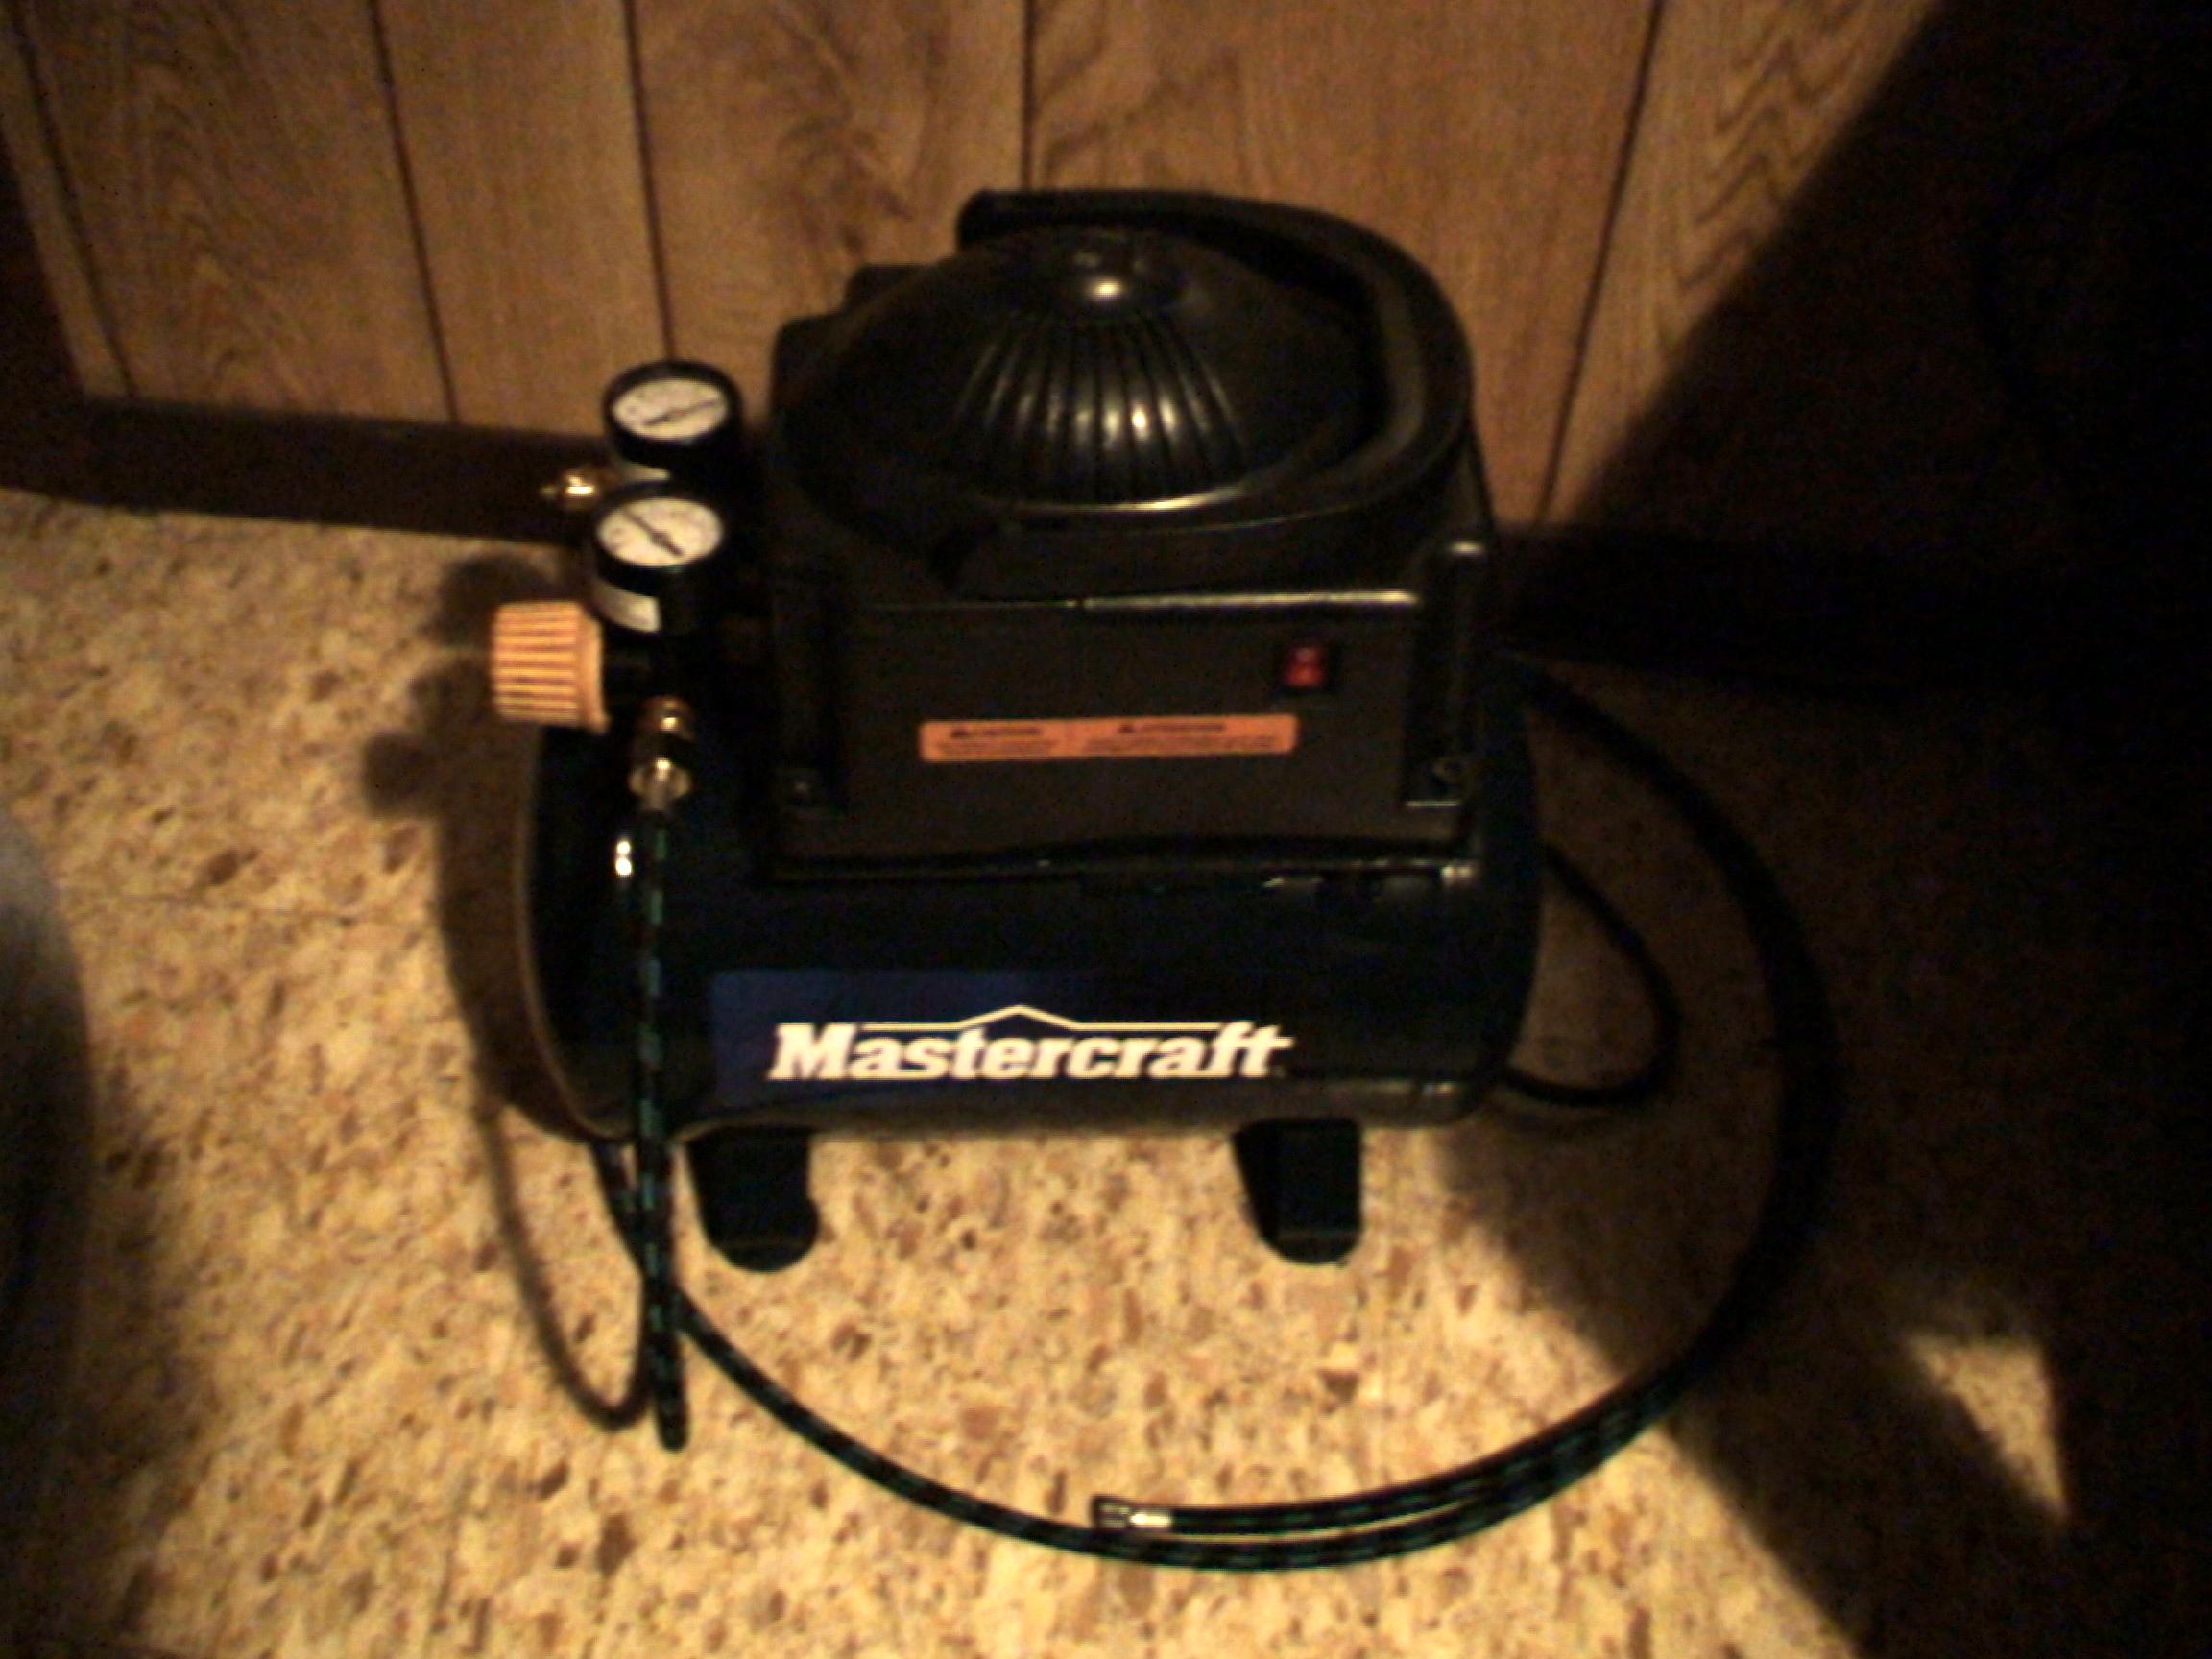 Compressor, My Air Brush Compressor